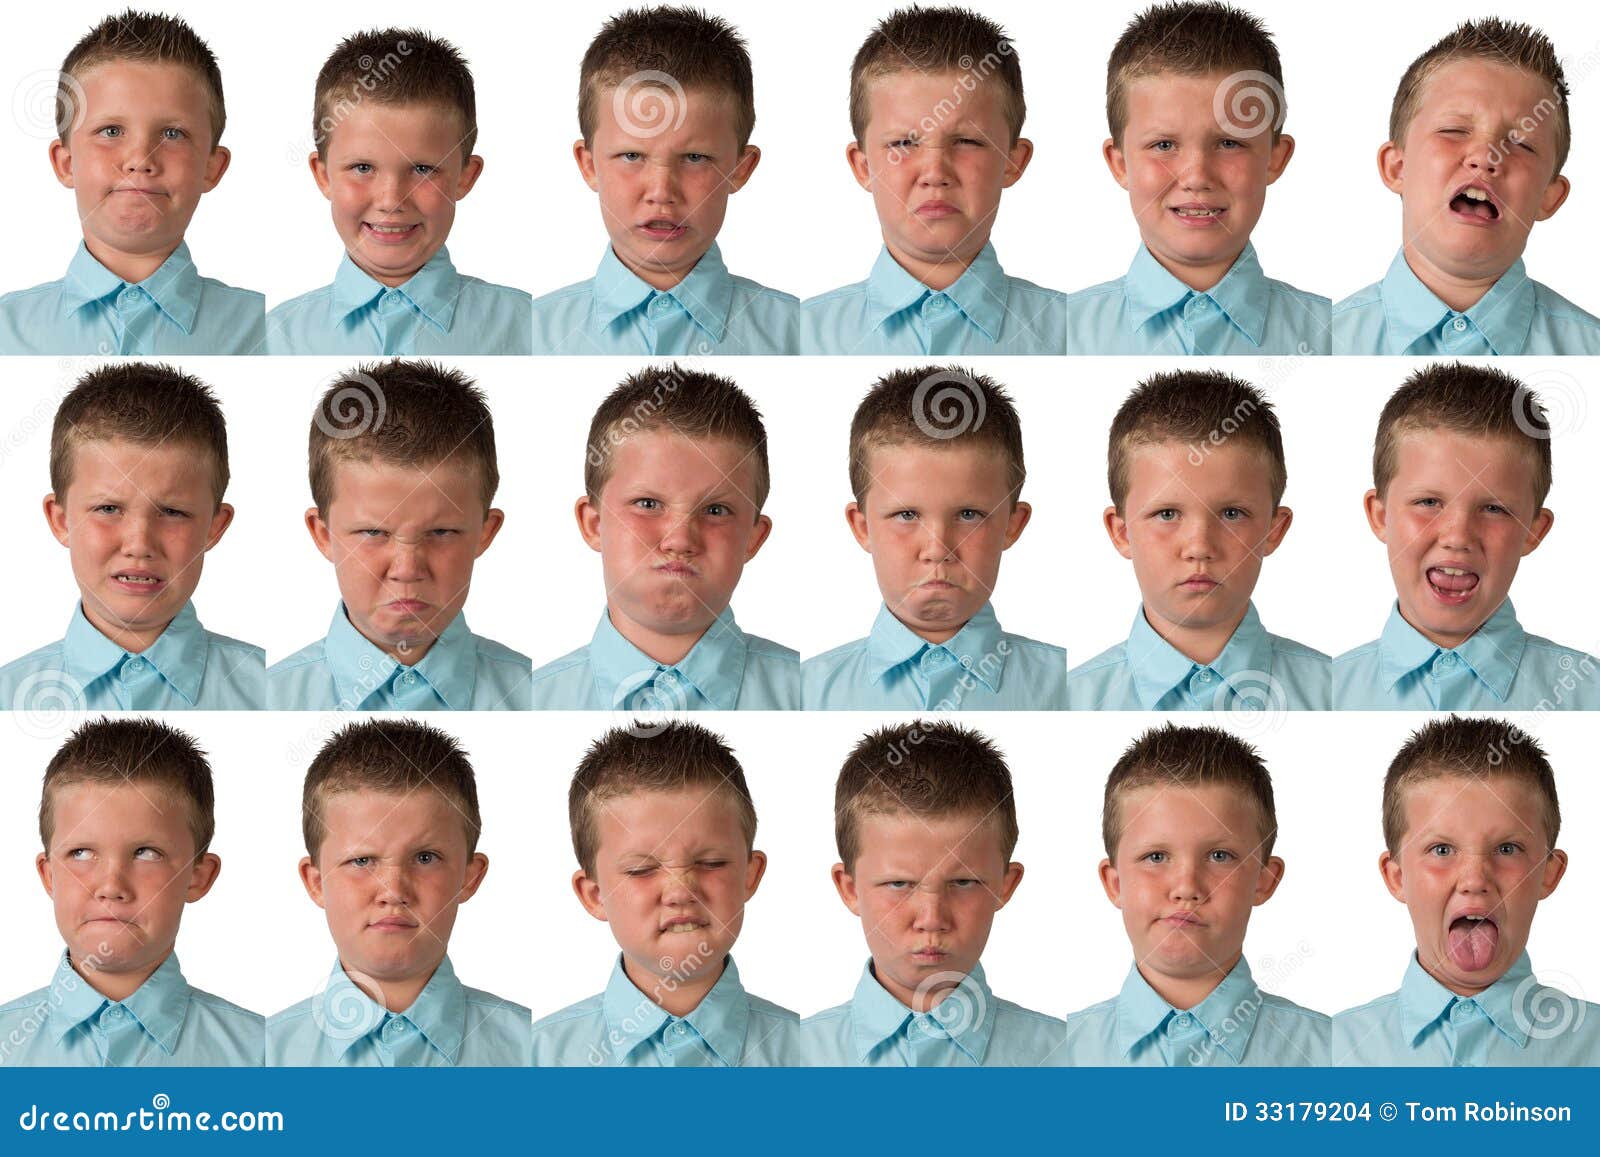 expressions - nine year old boy